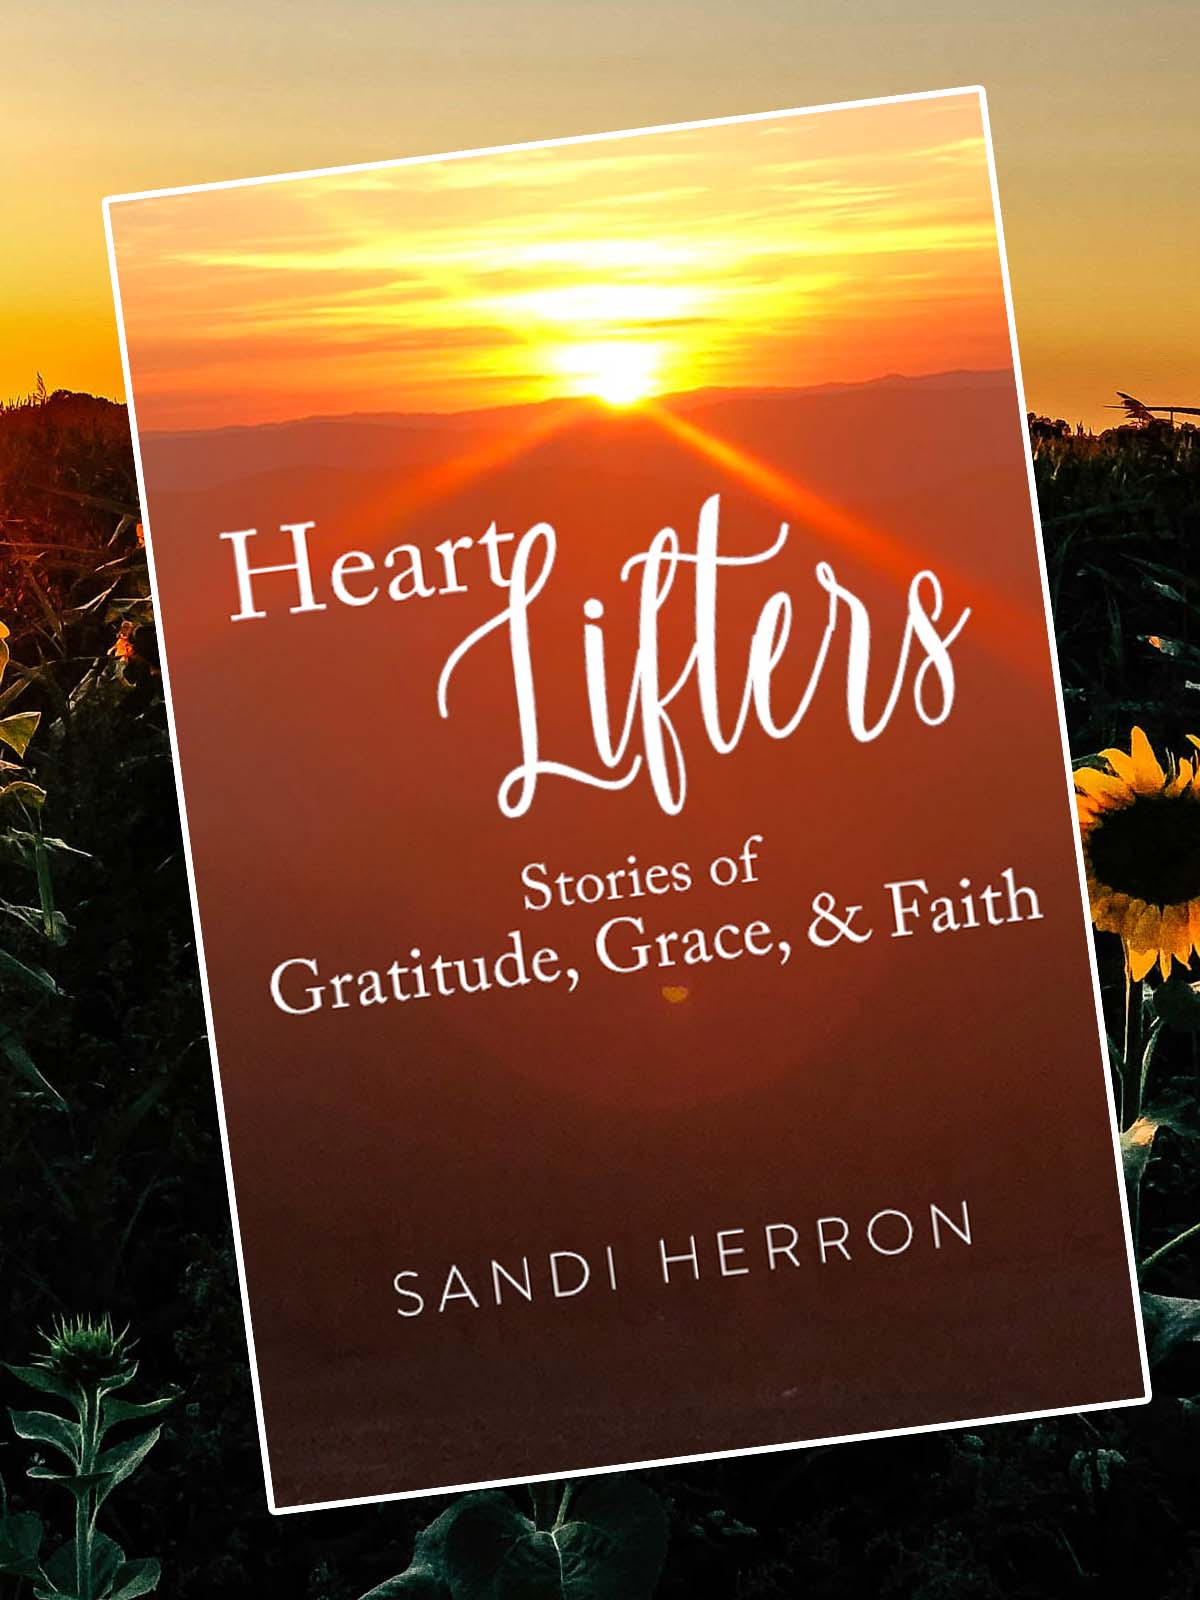 Heart Lifters. Stories of Gratitude, Grace, & Faith